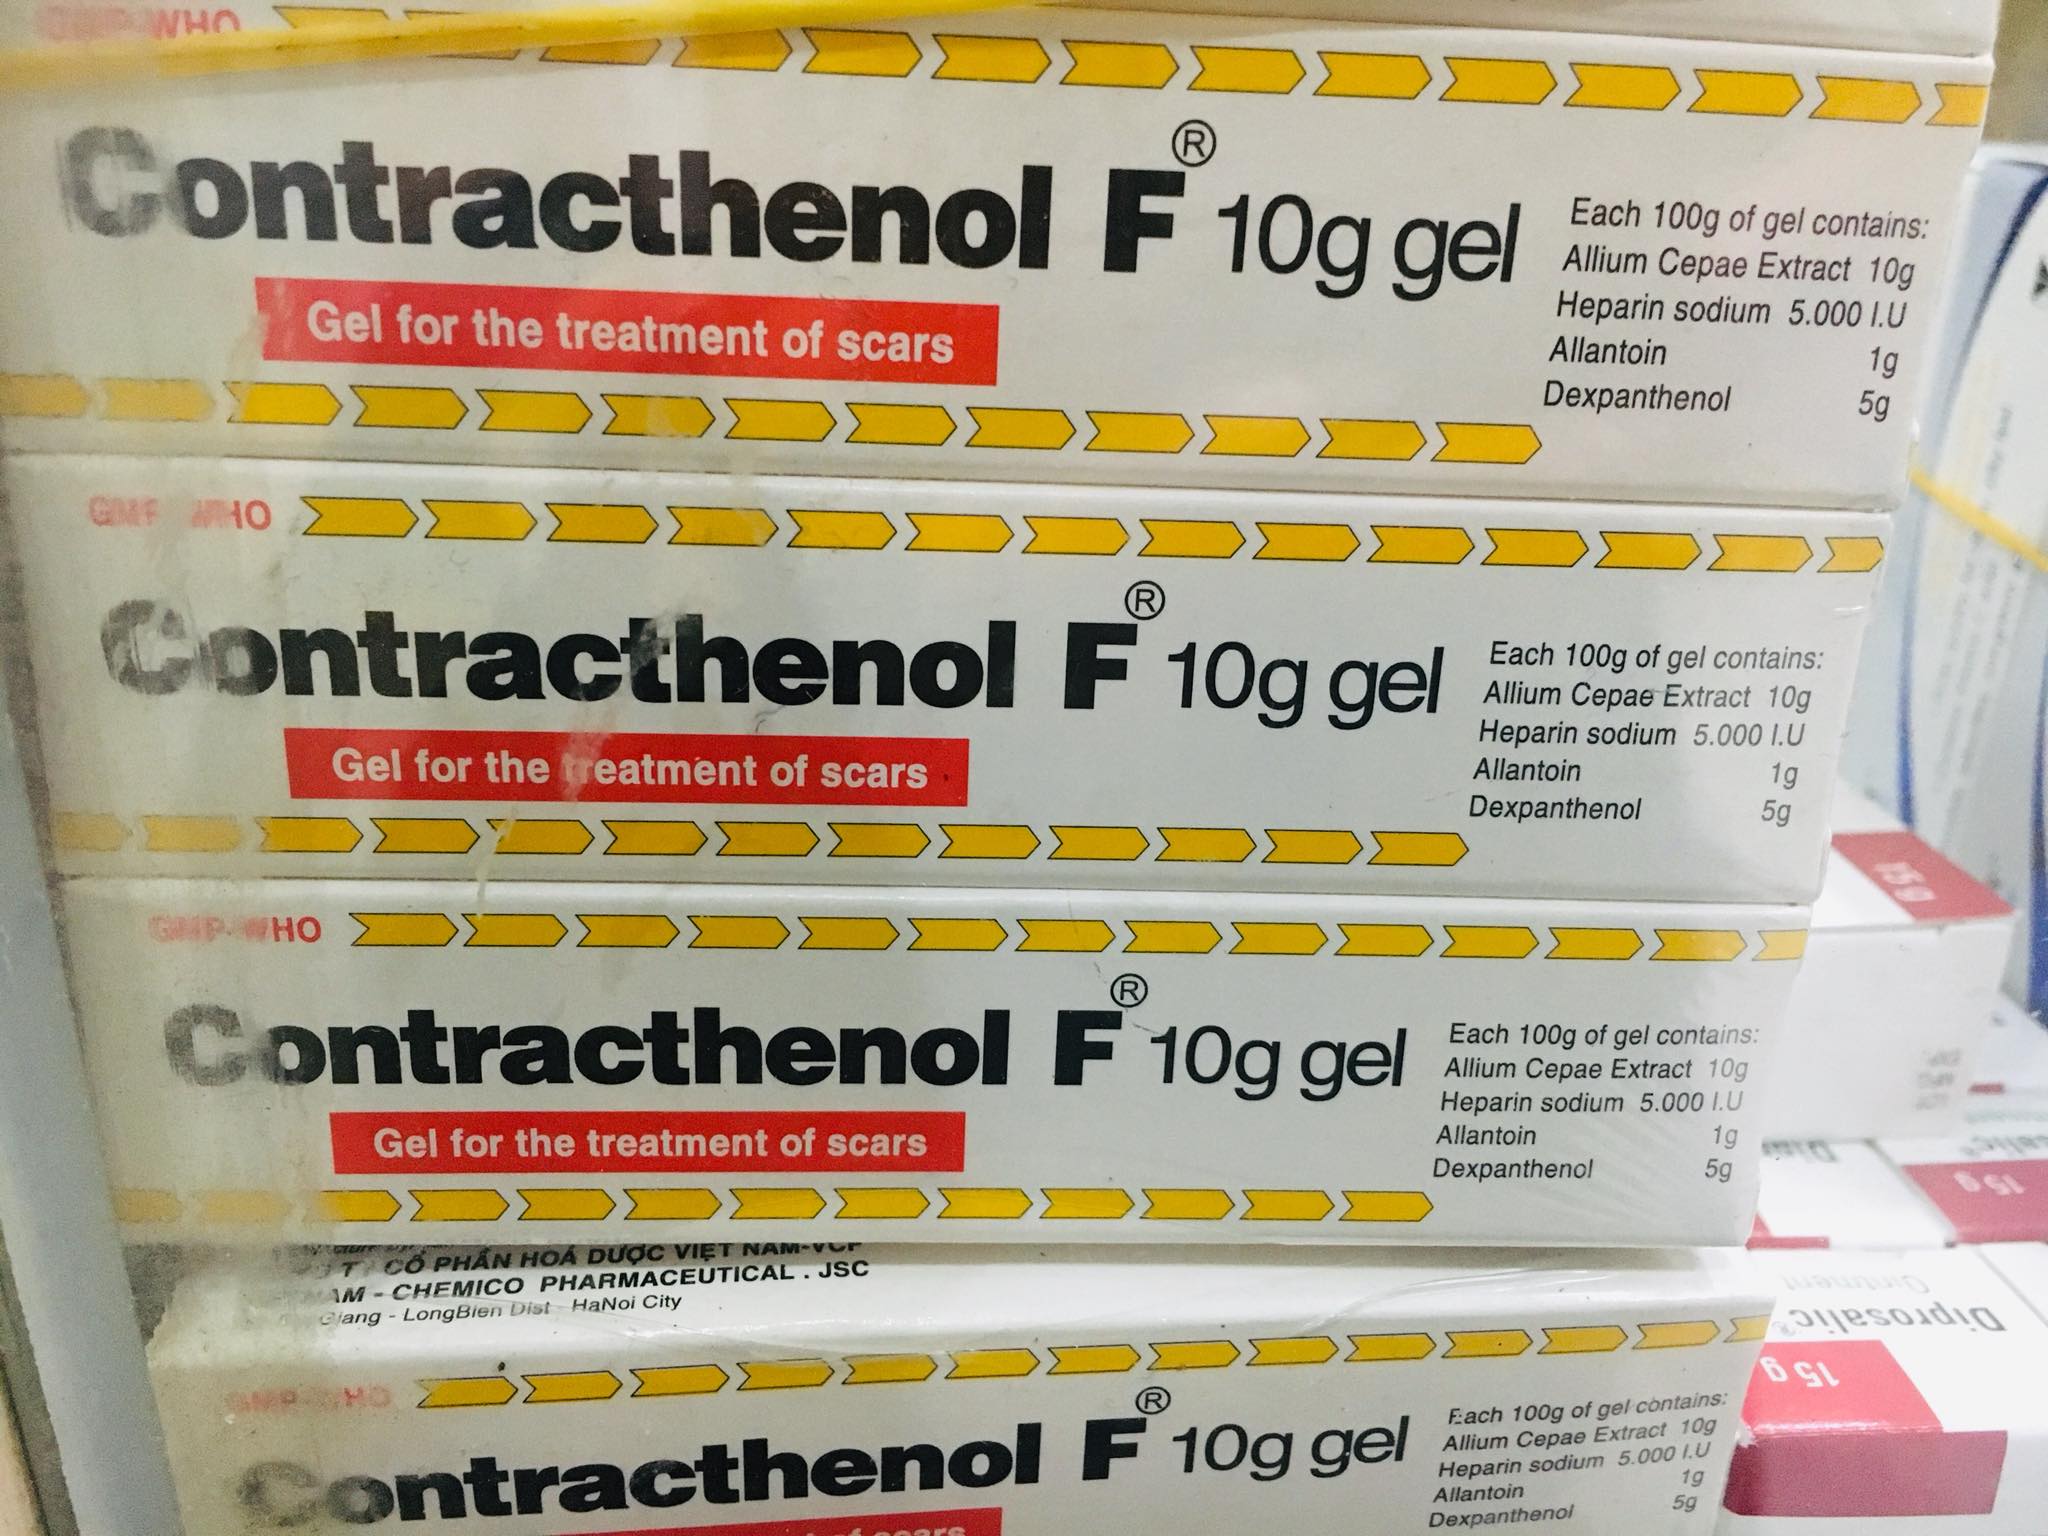 Contracthenol F 10g